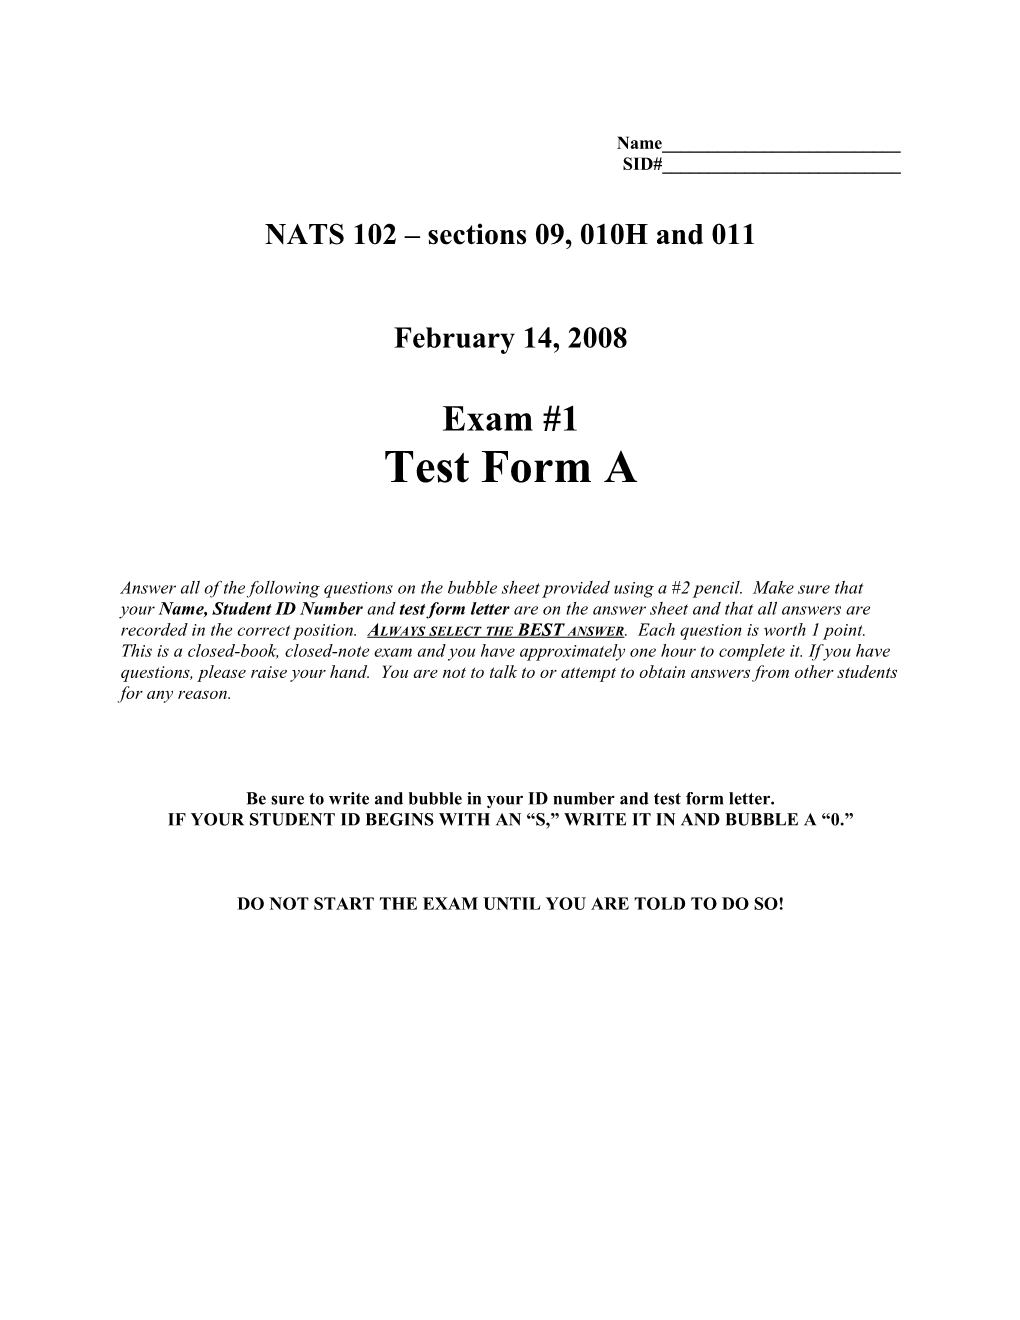 Nats 102 Exam #1 Lecture Tutorial Questions